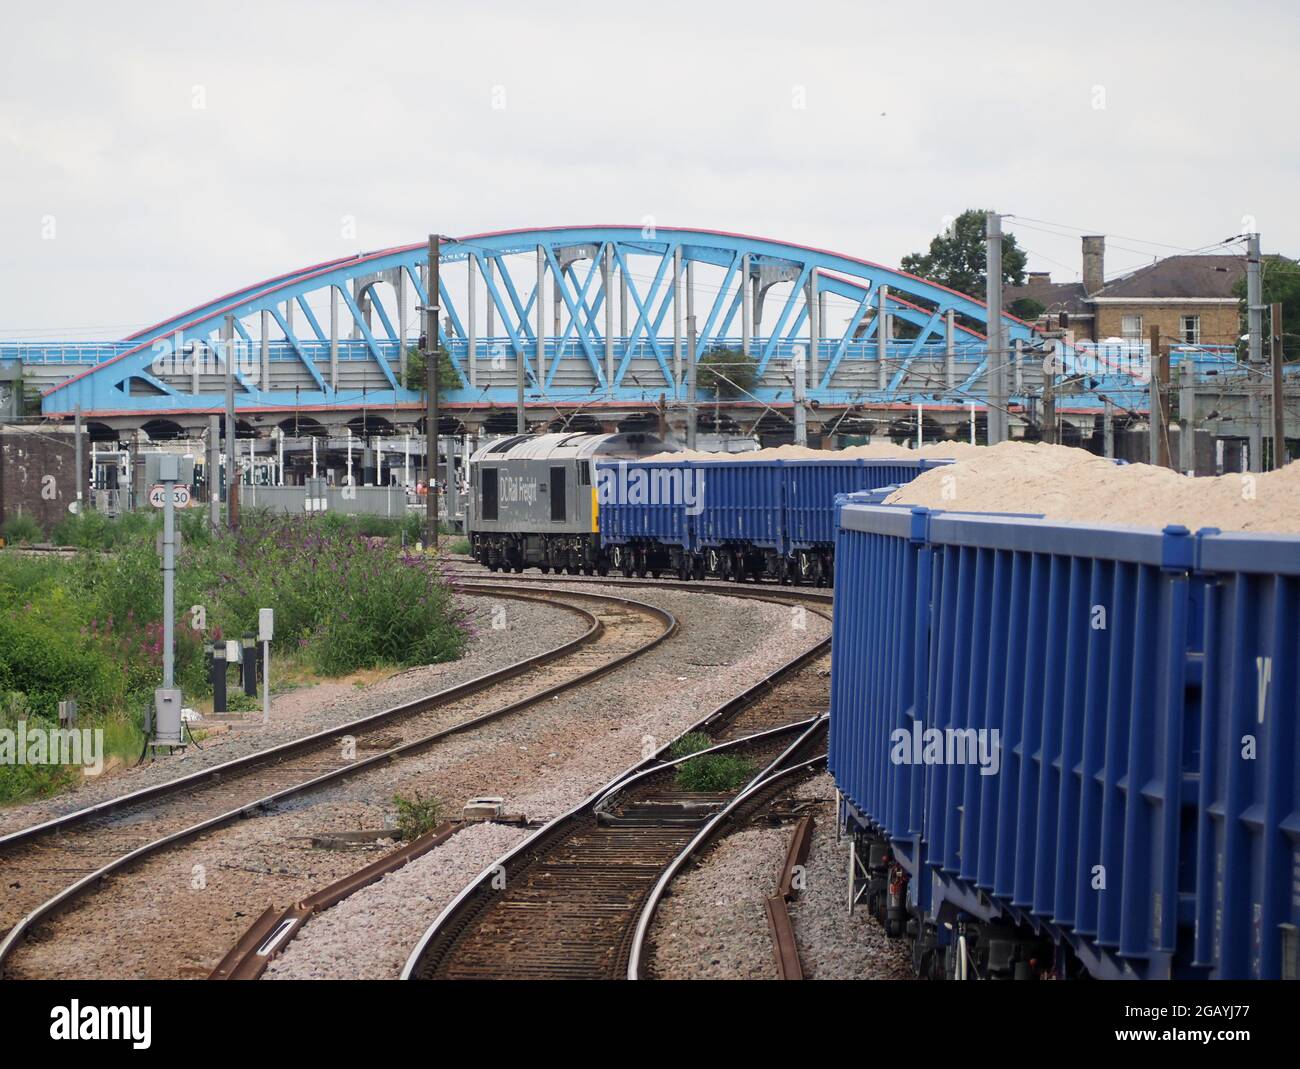 DC Rail Class 60 locomotiva per carichi pesanti 60029 ben Nevis si avvicina a Peterborough sulla linea Ely-Peterborough Foto Stock